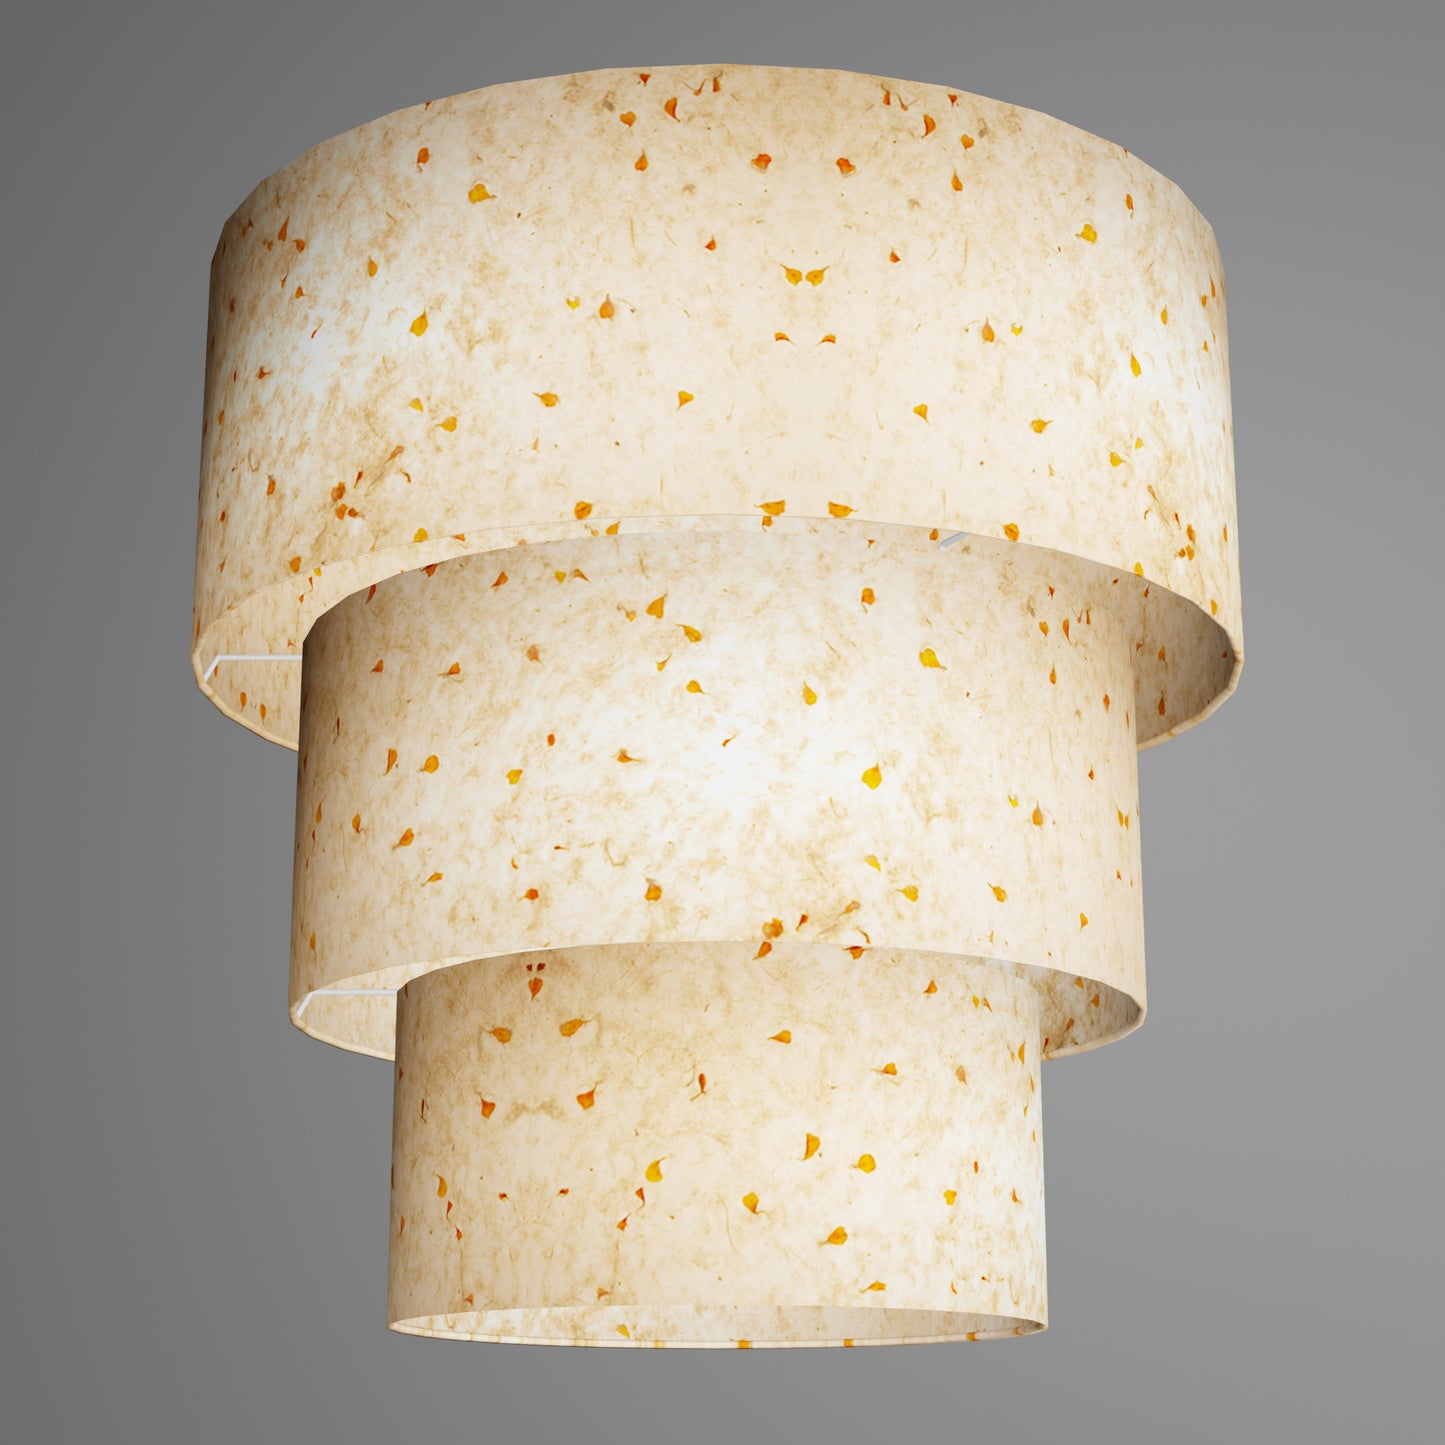 3 Tier Lamp Shade - P32 - Marigold Petals on Natural Lokta, 50cm x 20cm, 40cm x 17.5cm & 30cm x 15cm